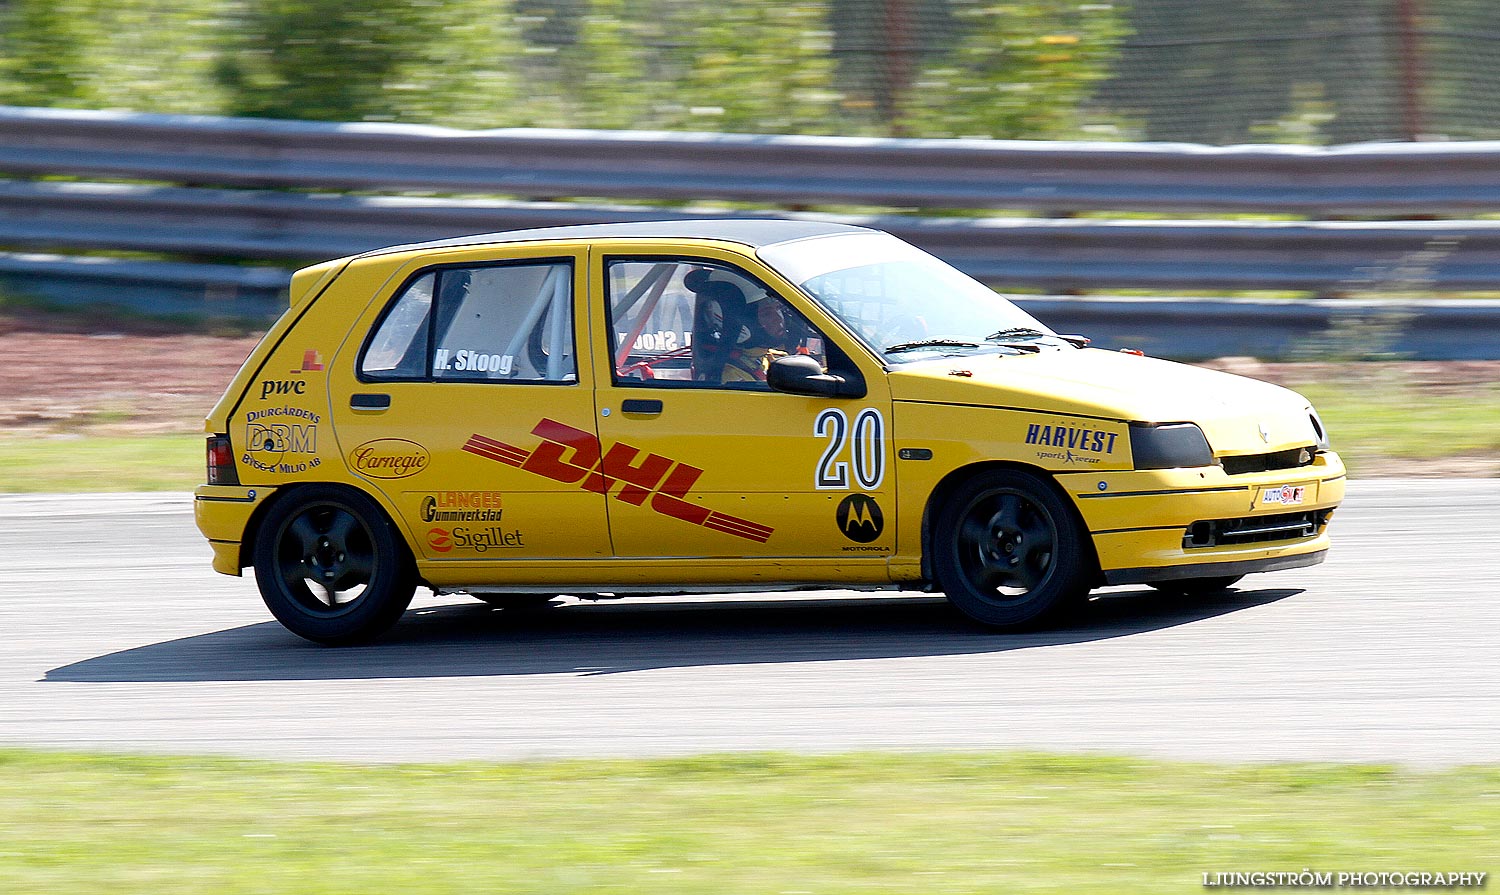 SSK Raceweek,mix,Kinnekulle Ring,Götene,Sverige,Motorsport,,2011,44541